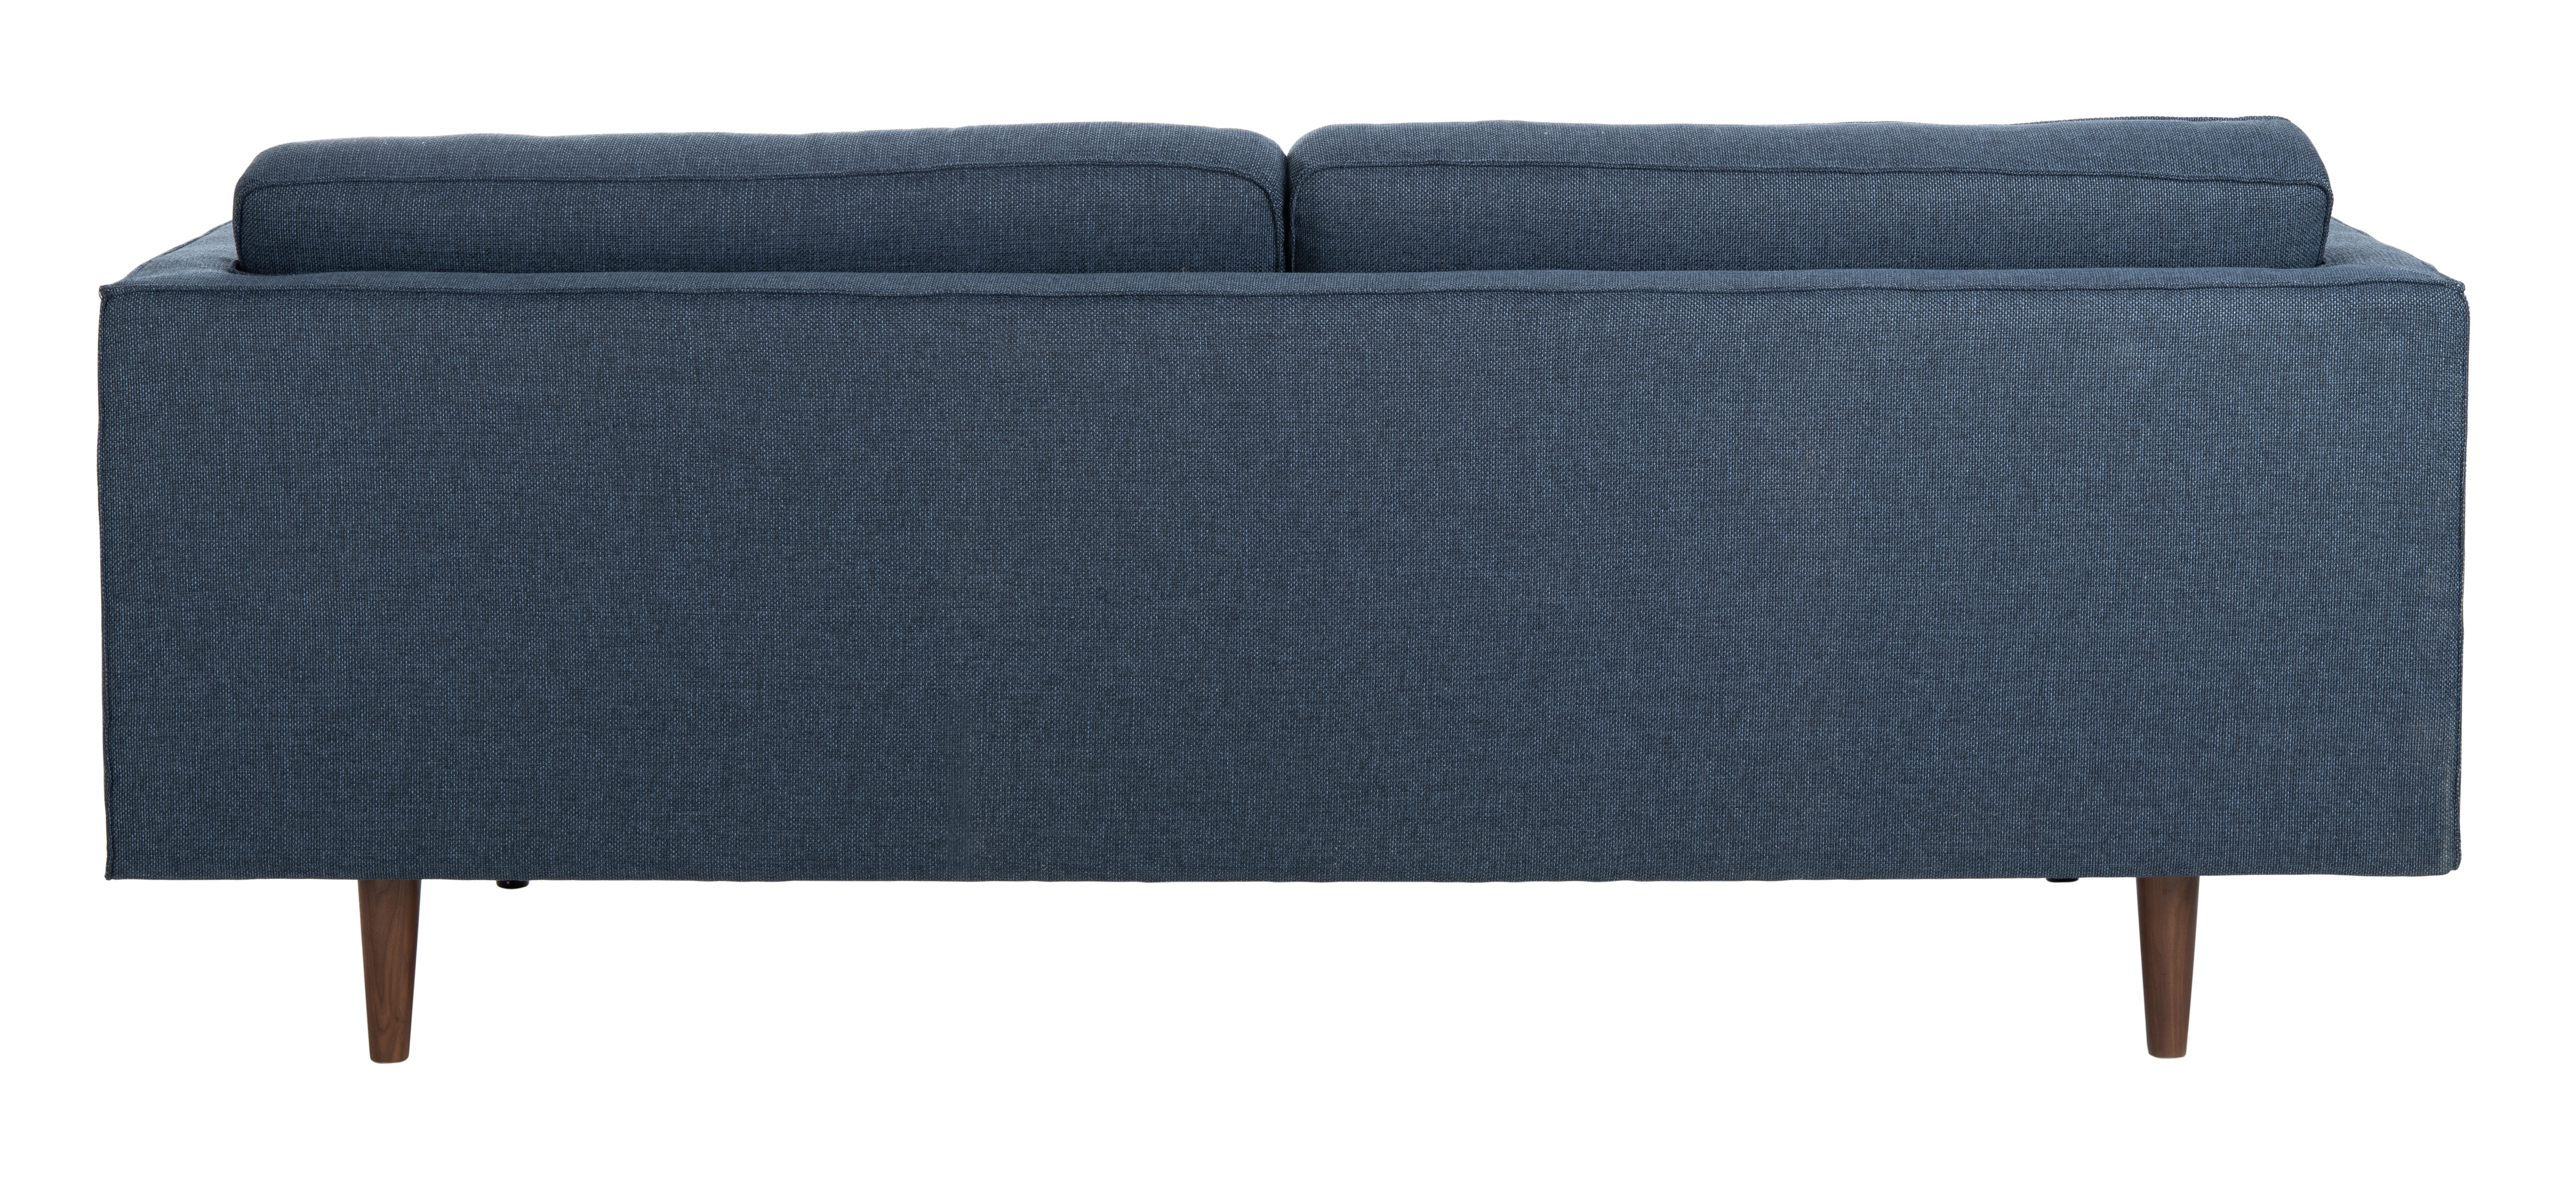 Hurley Mid Century Sofa - Dark Blue - Arlo Home - Image 1